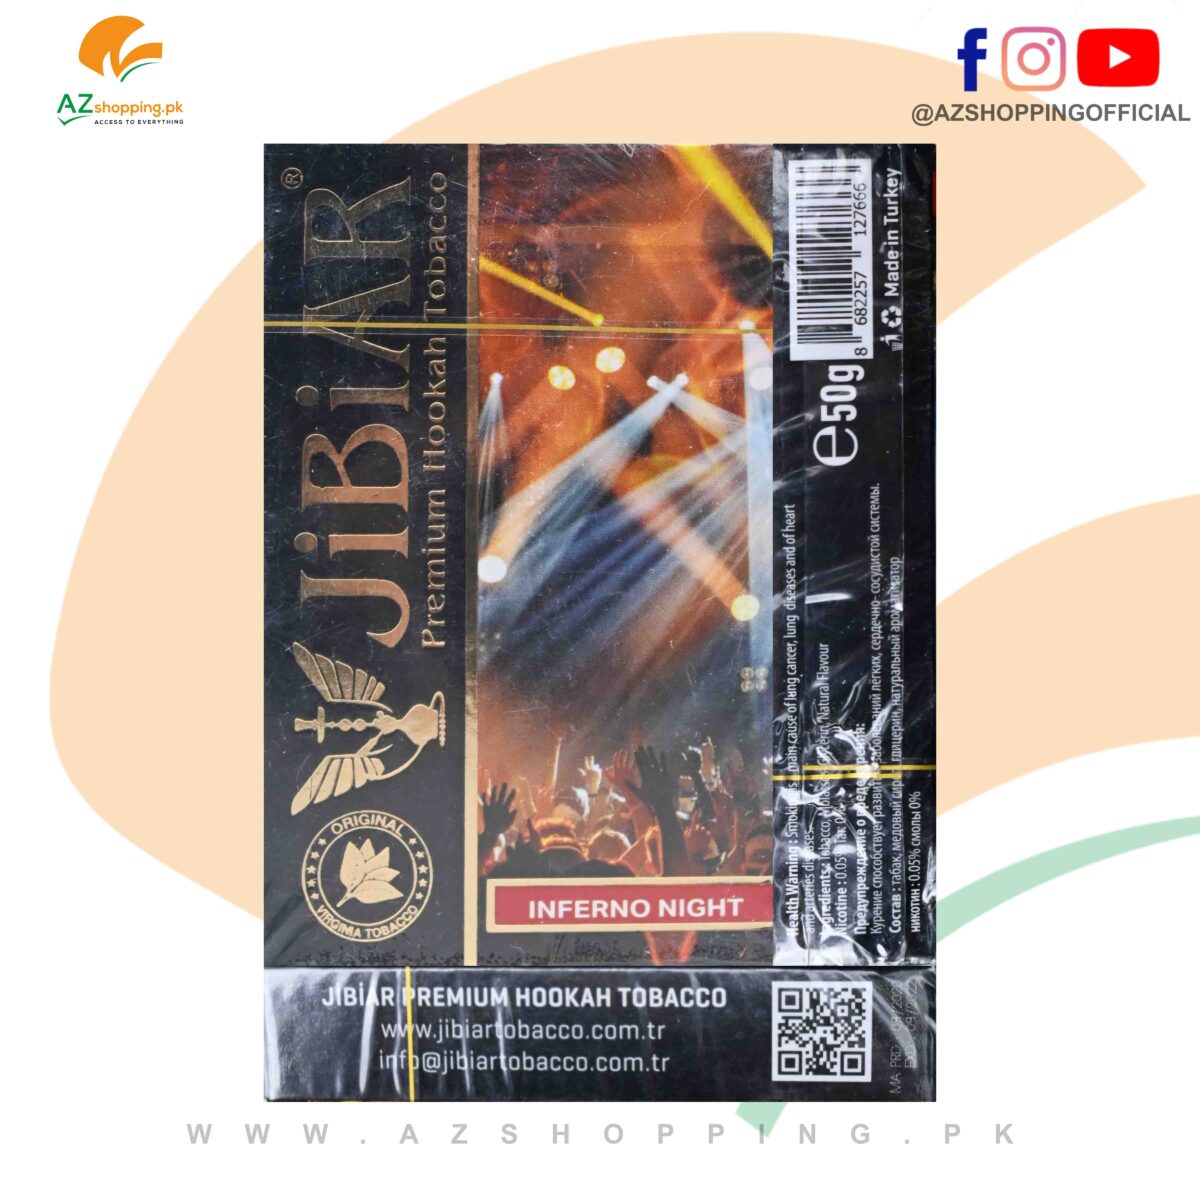 Jibiar Tobacco – Premium Hookah Tobacco Shisha Inferno Night Flavor – 50 gram